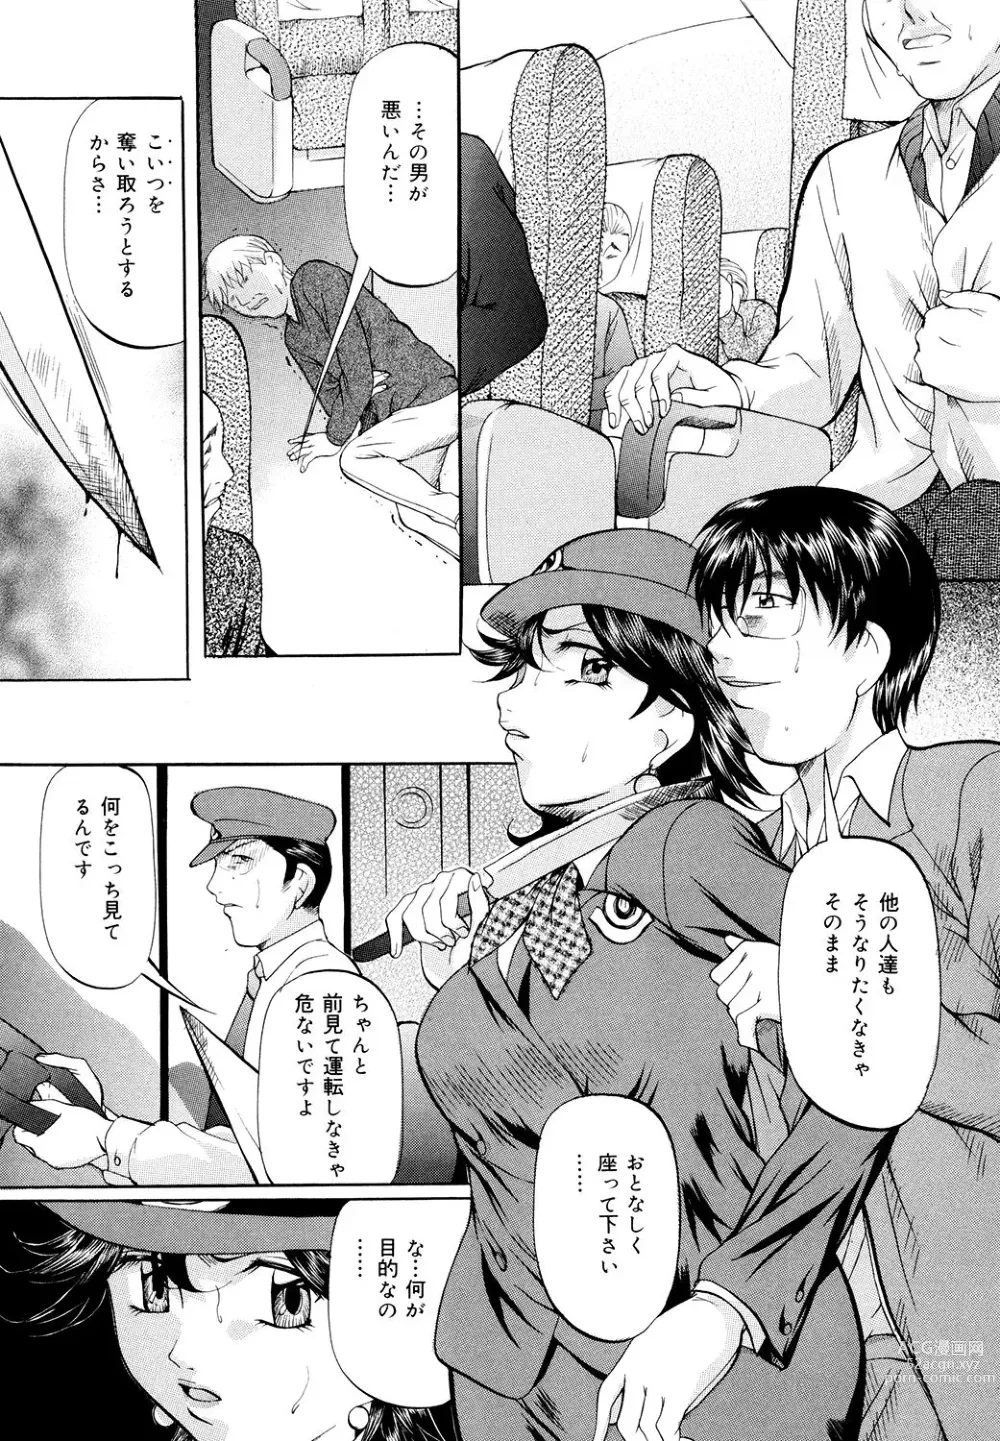 Page 25 of manga Kyonyuu Korogashi